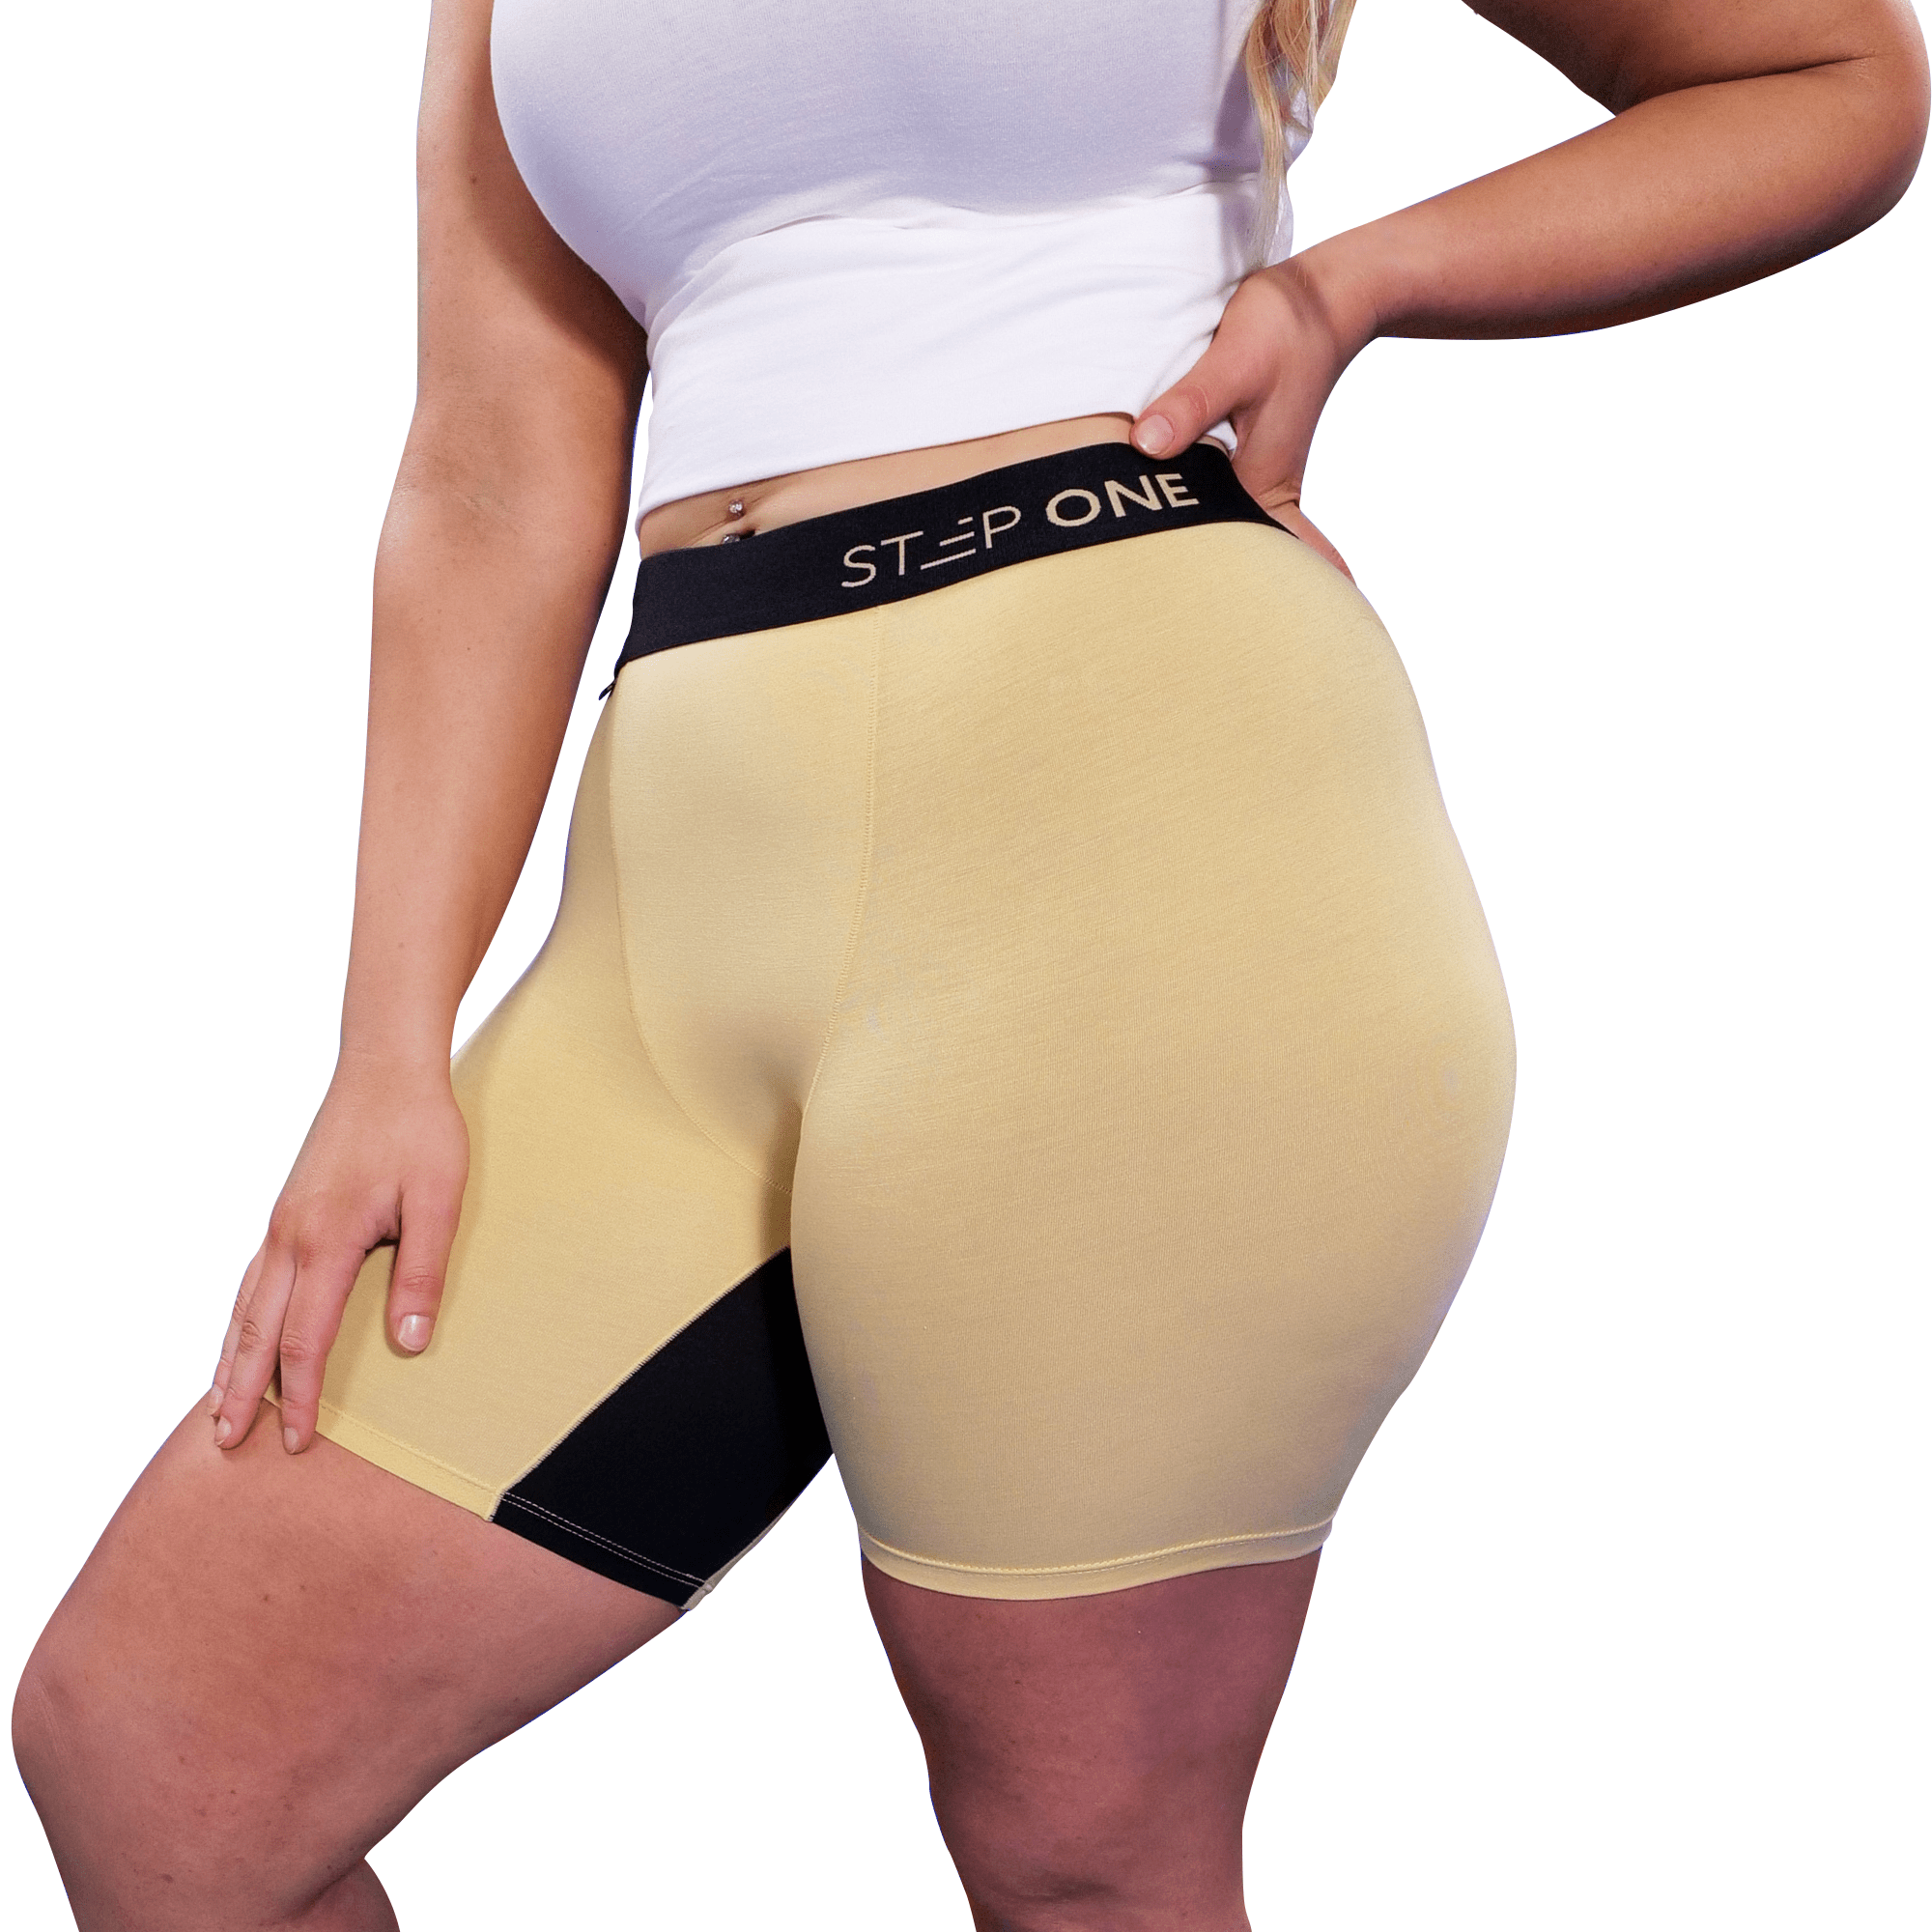 Women's Body Shorts - Sandipants